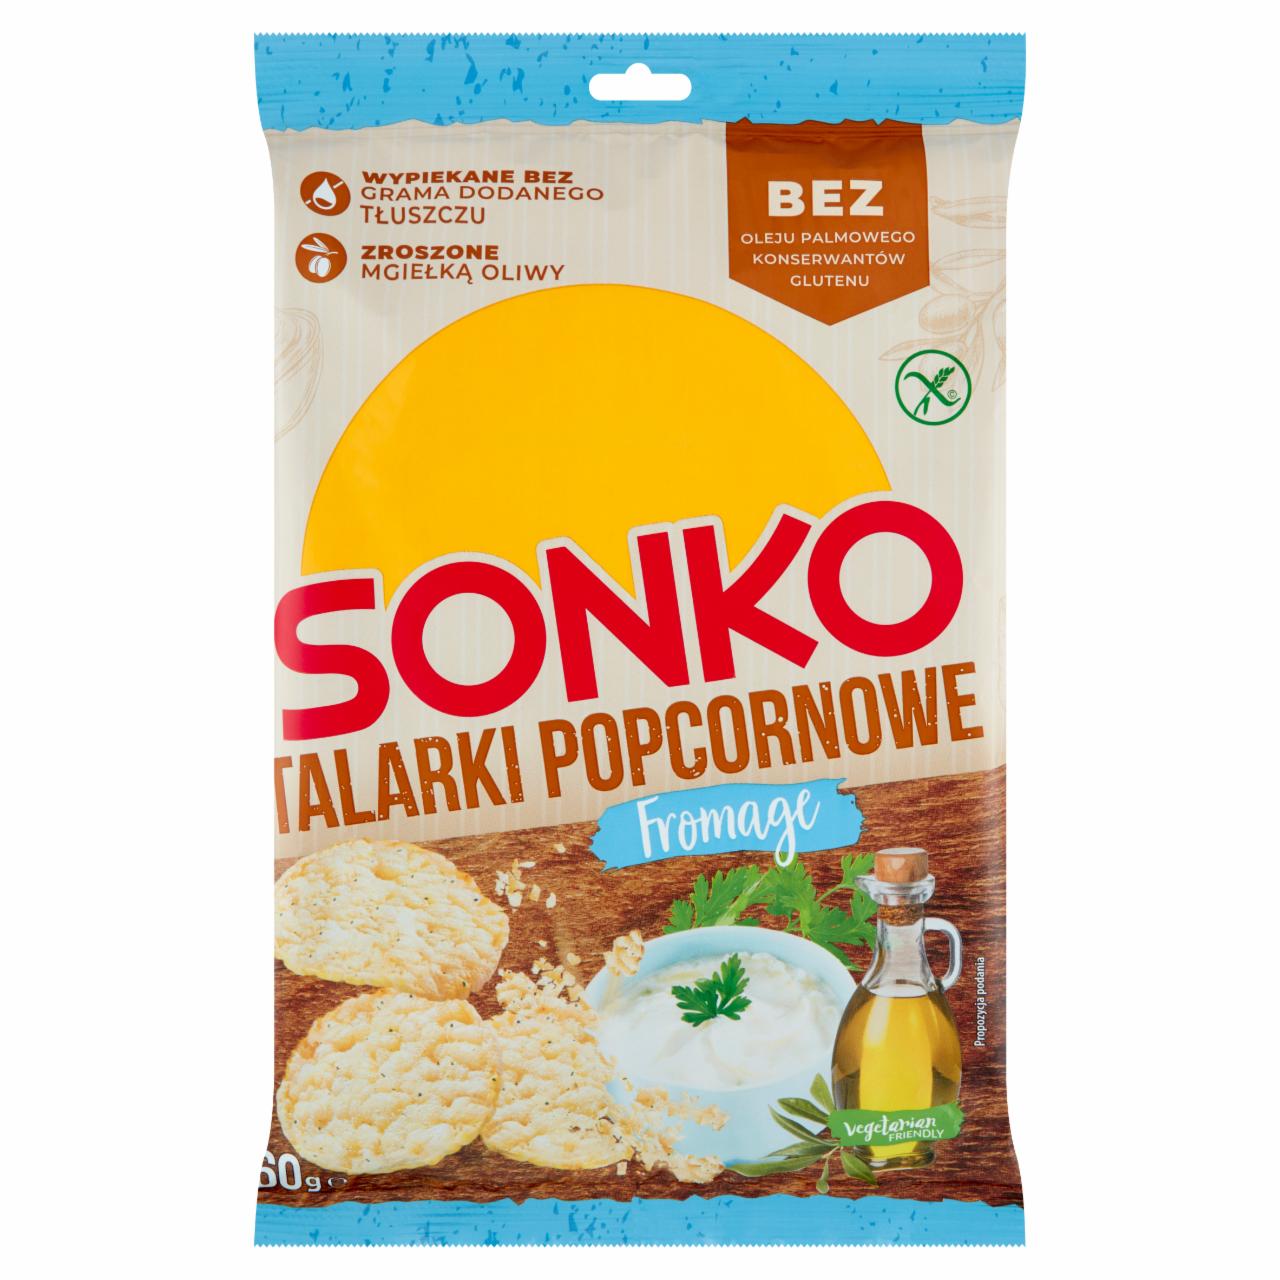 Zdjęcia - Sonko Talarki popcornowe fromage